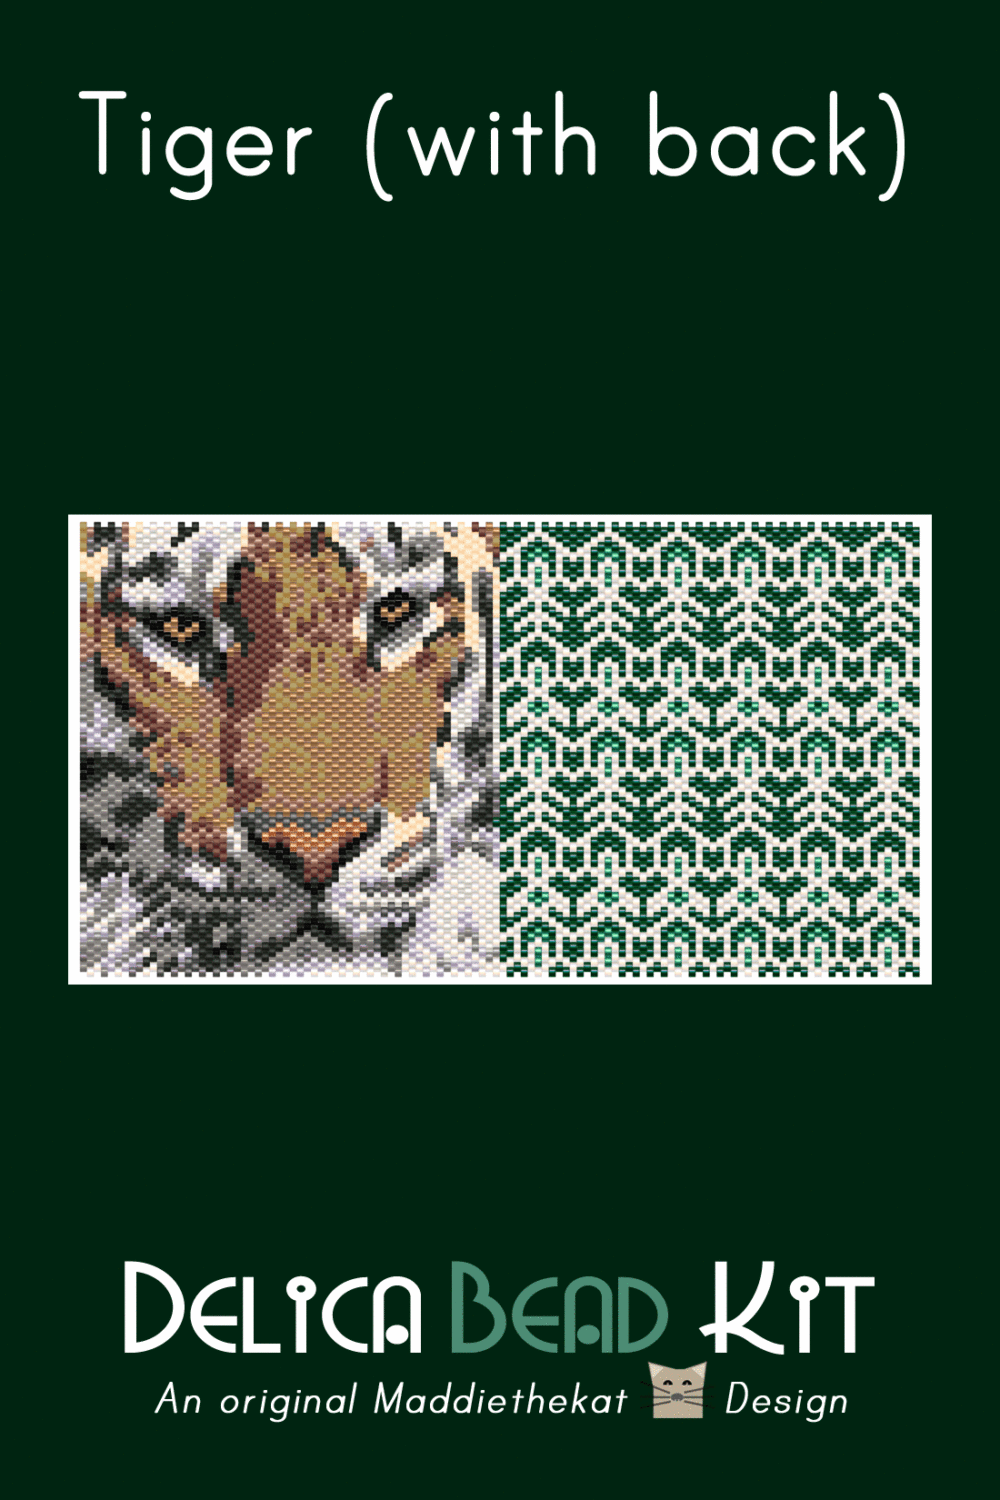 Tiger with Back Peyote Bead Pattern PDF or Bead Kit